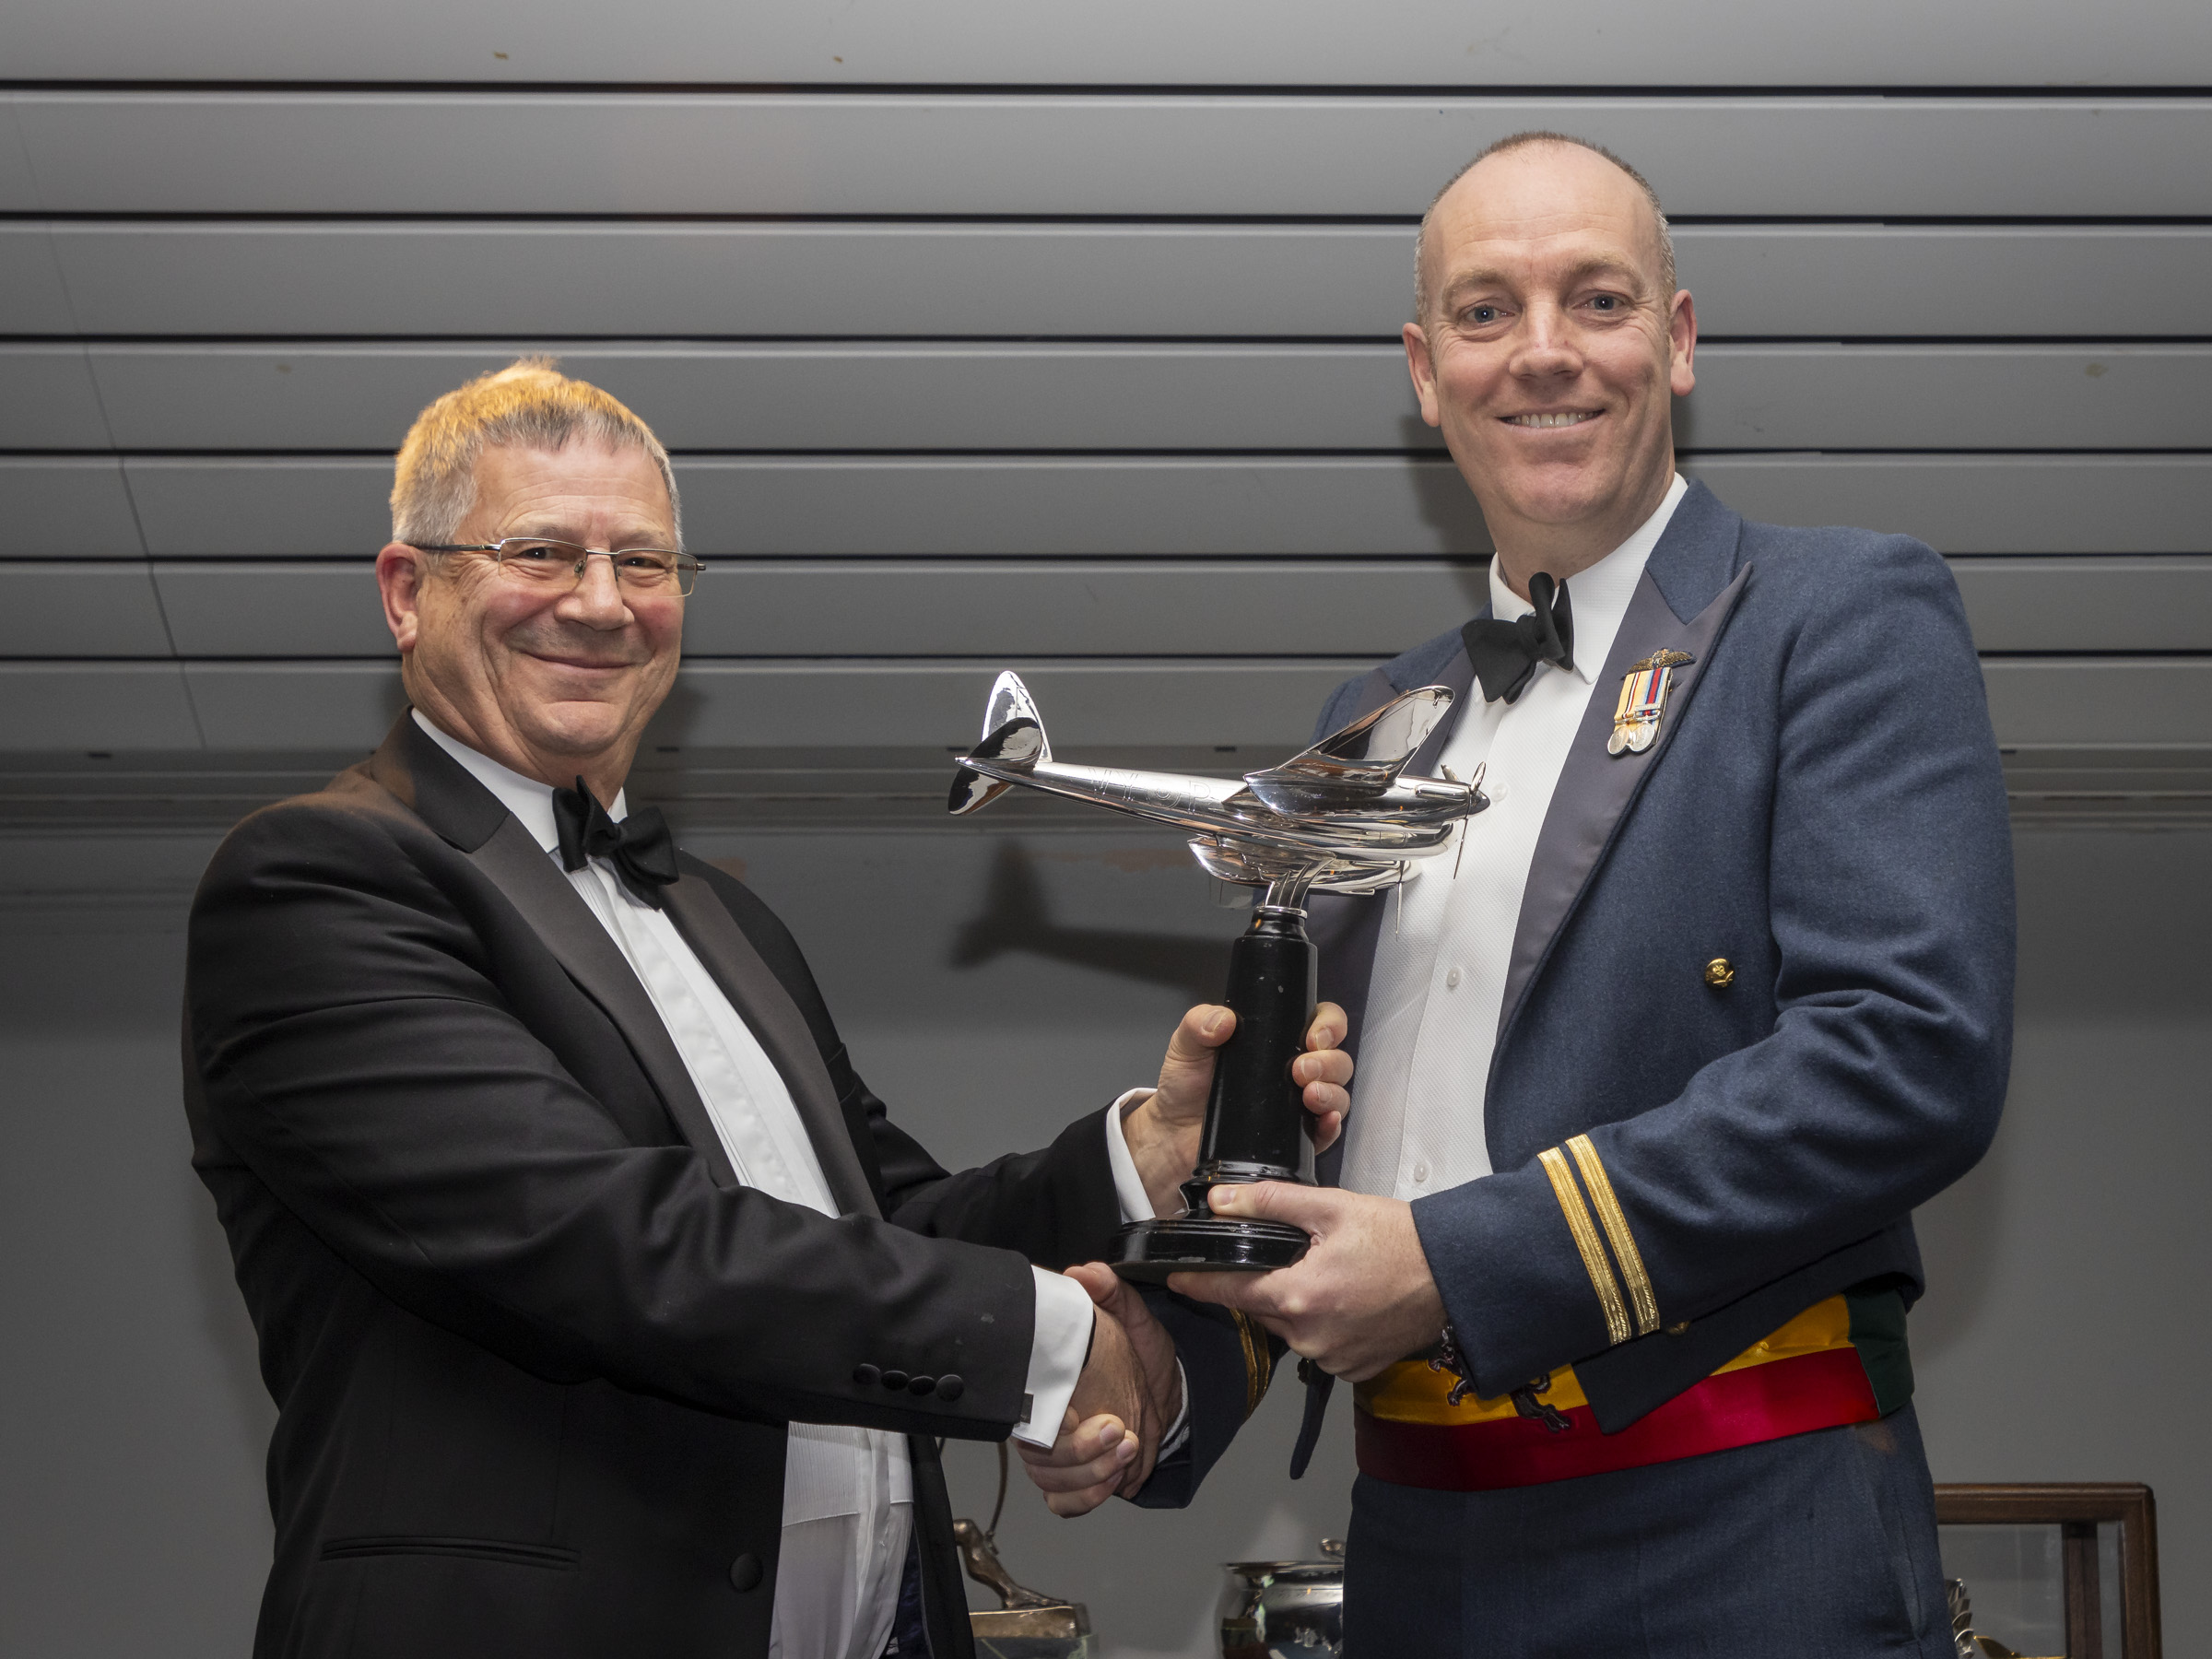 Air Land Integration Award presented to Flight Lieutenant Matt Jenkinson